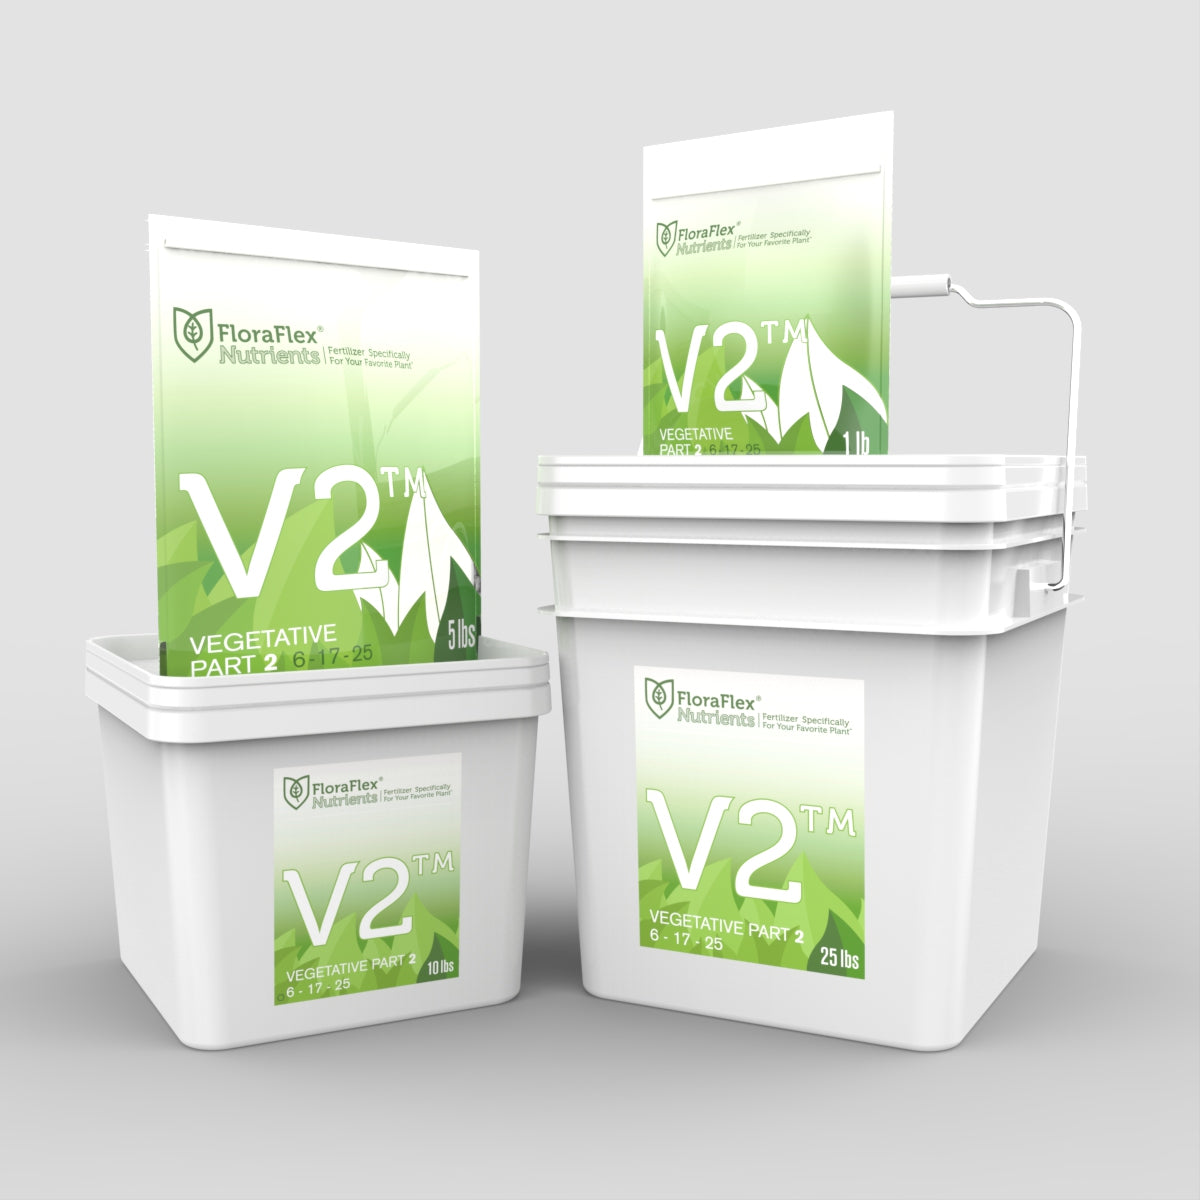 V2 - Vegative - Part 2